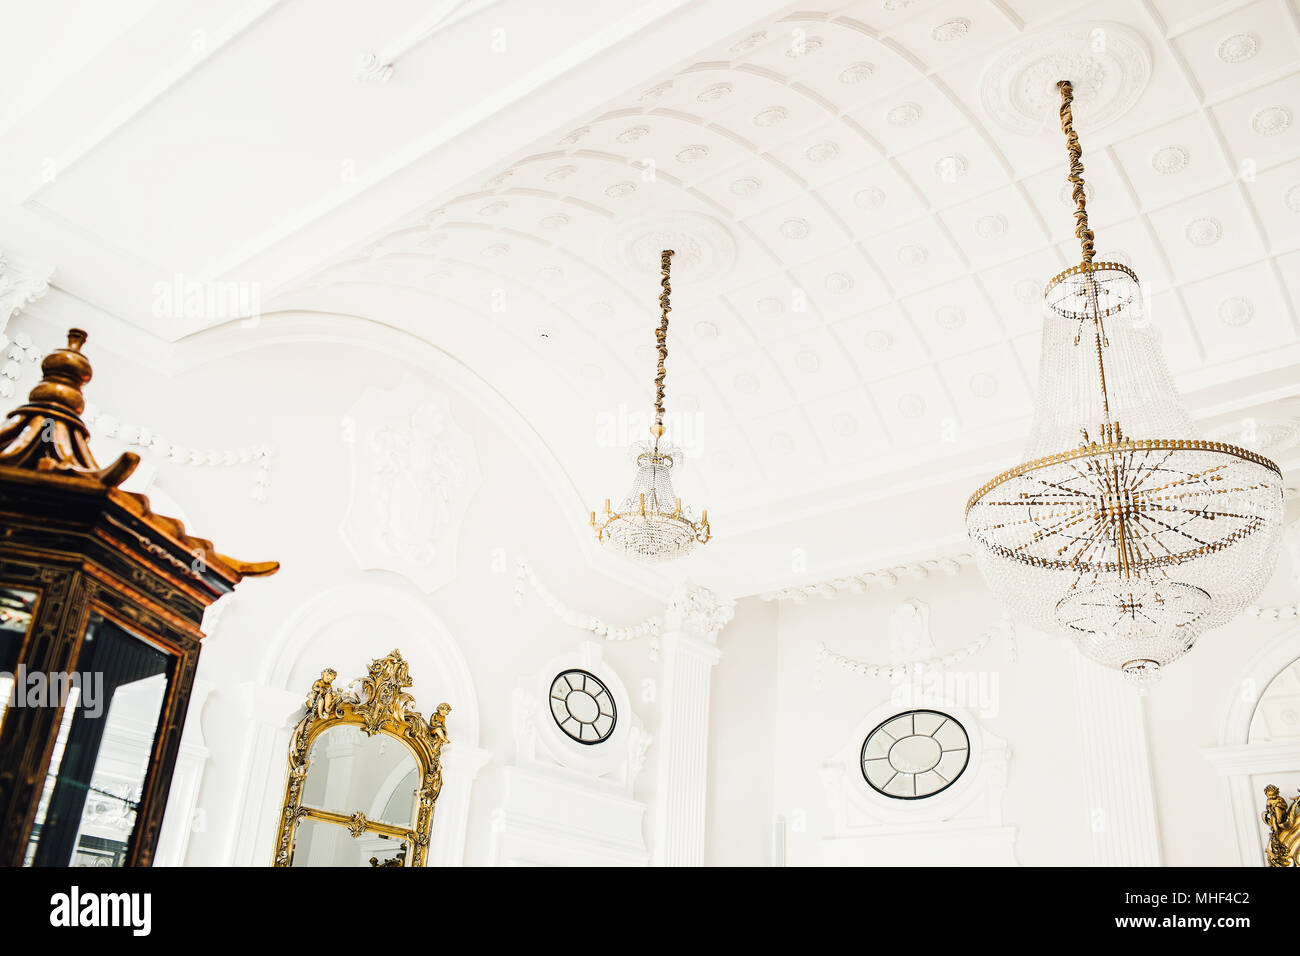 luxury interior hall with chandelier Stock Photo